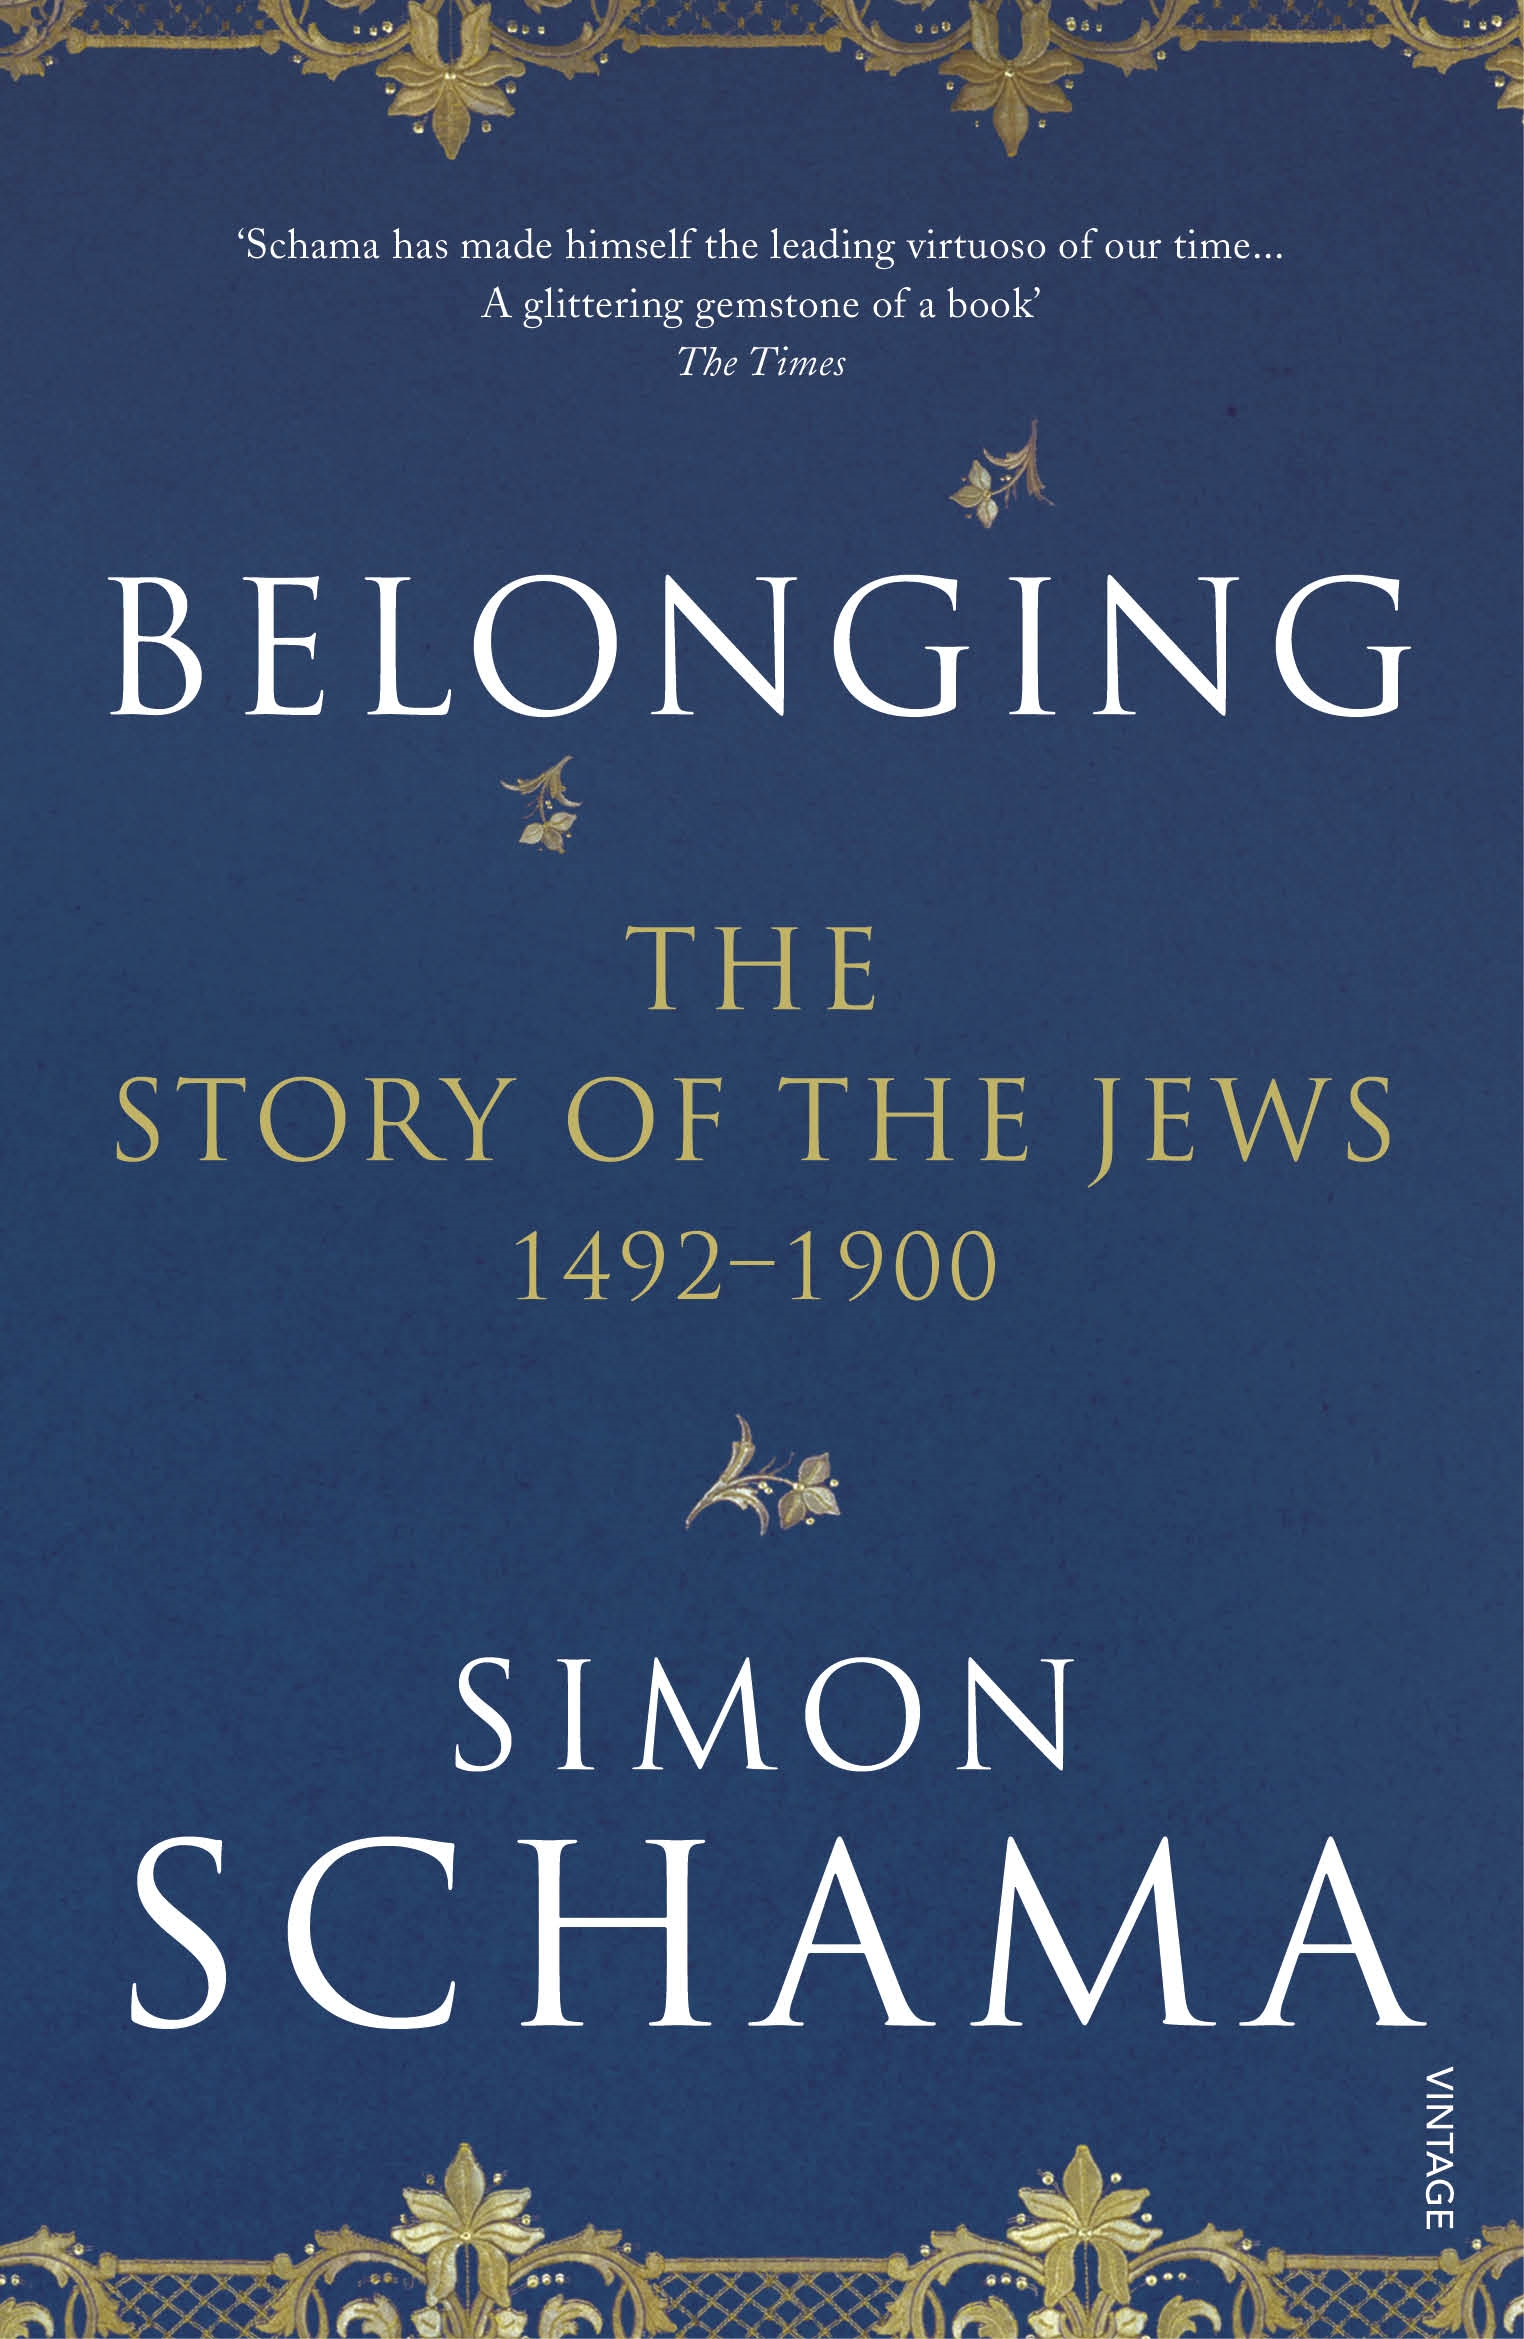 Belonging by Simon Schama - Penguin Books Australia